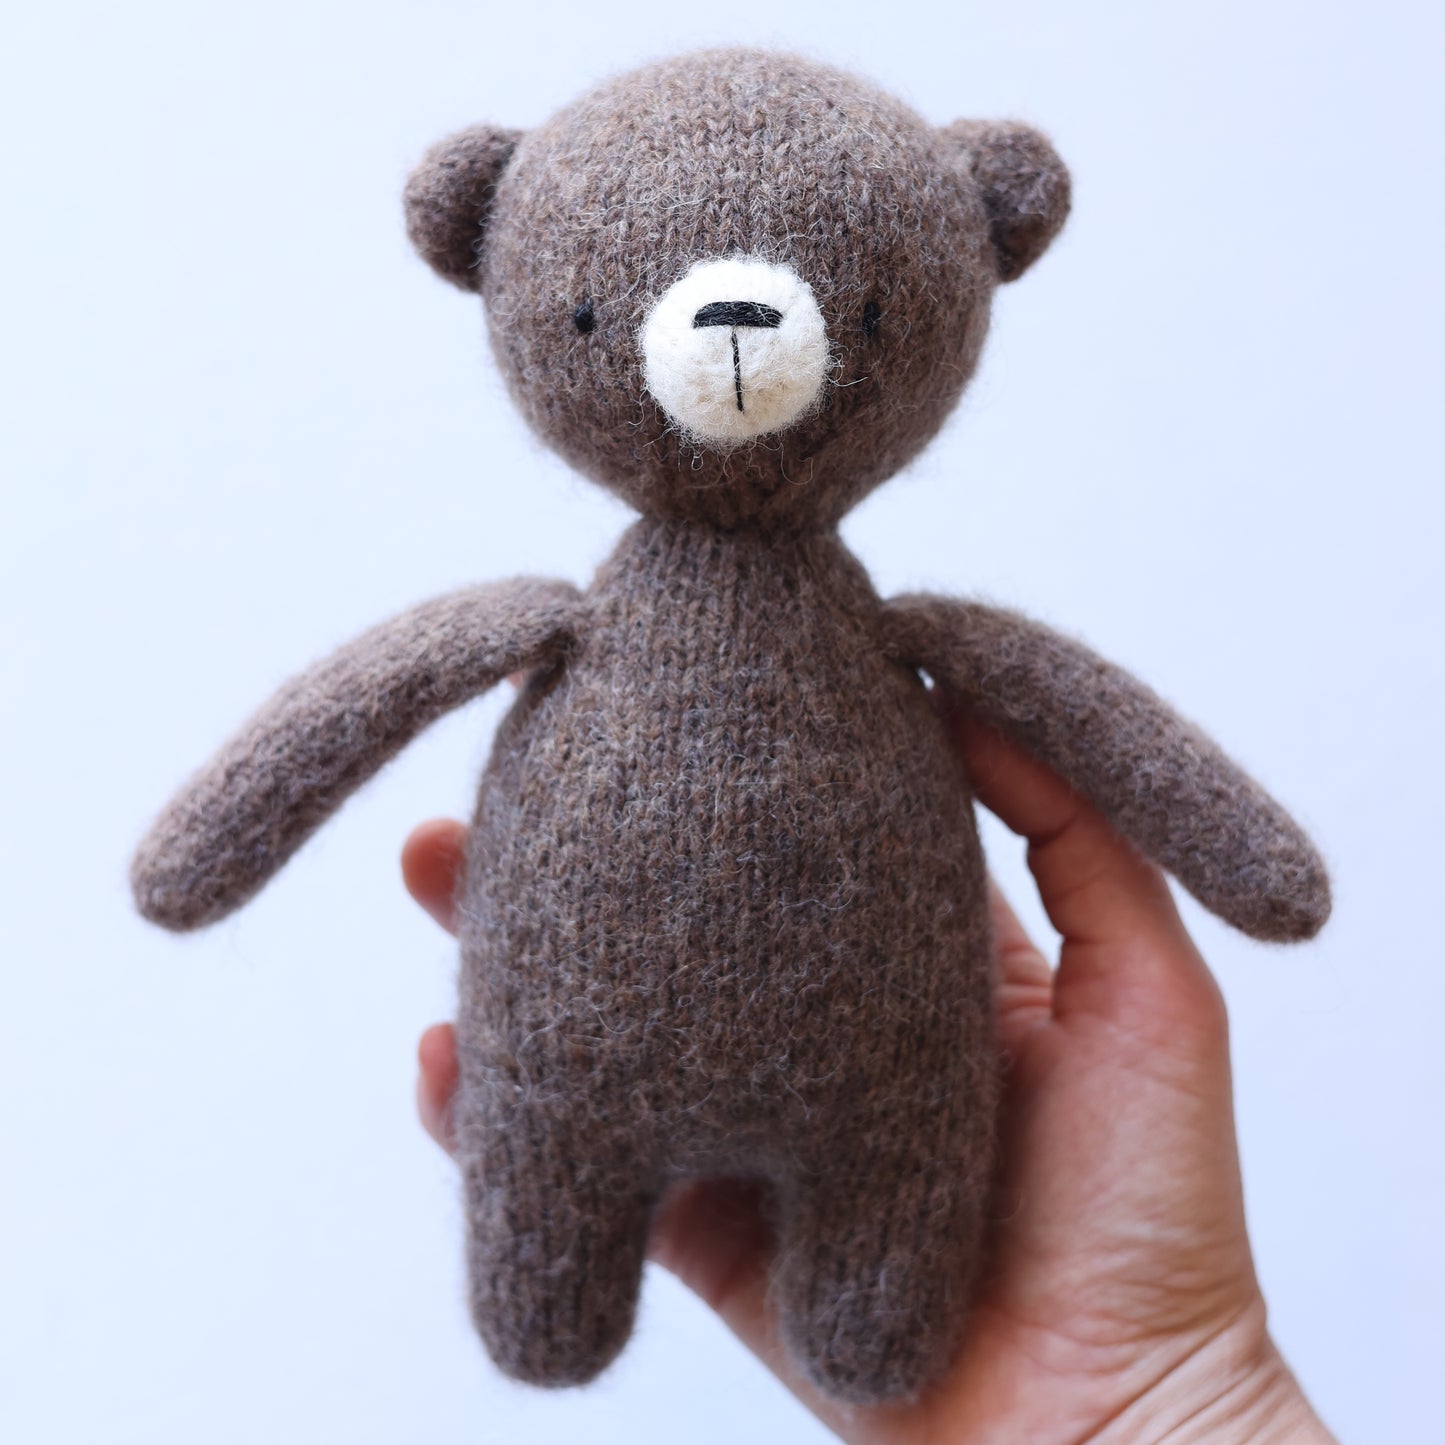 Handmade Teddy bear